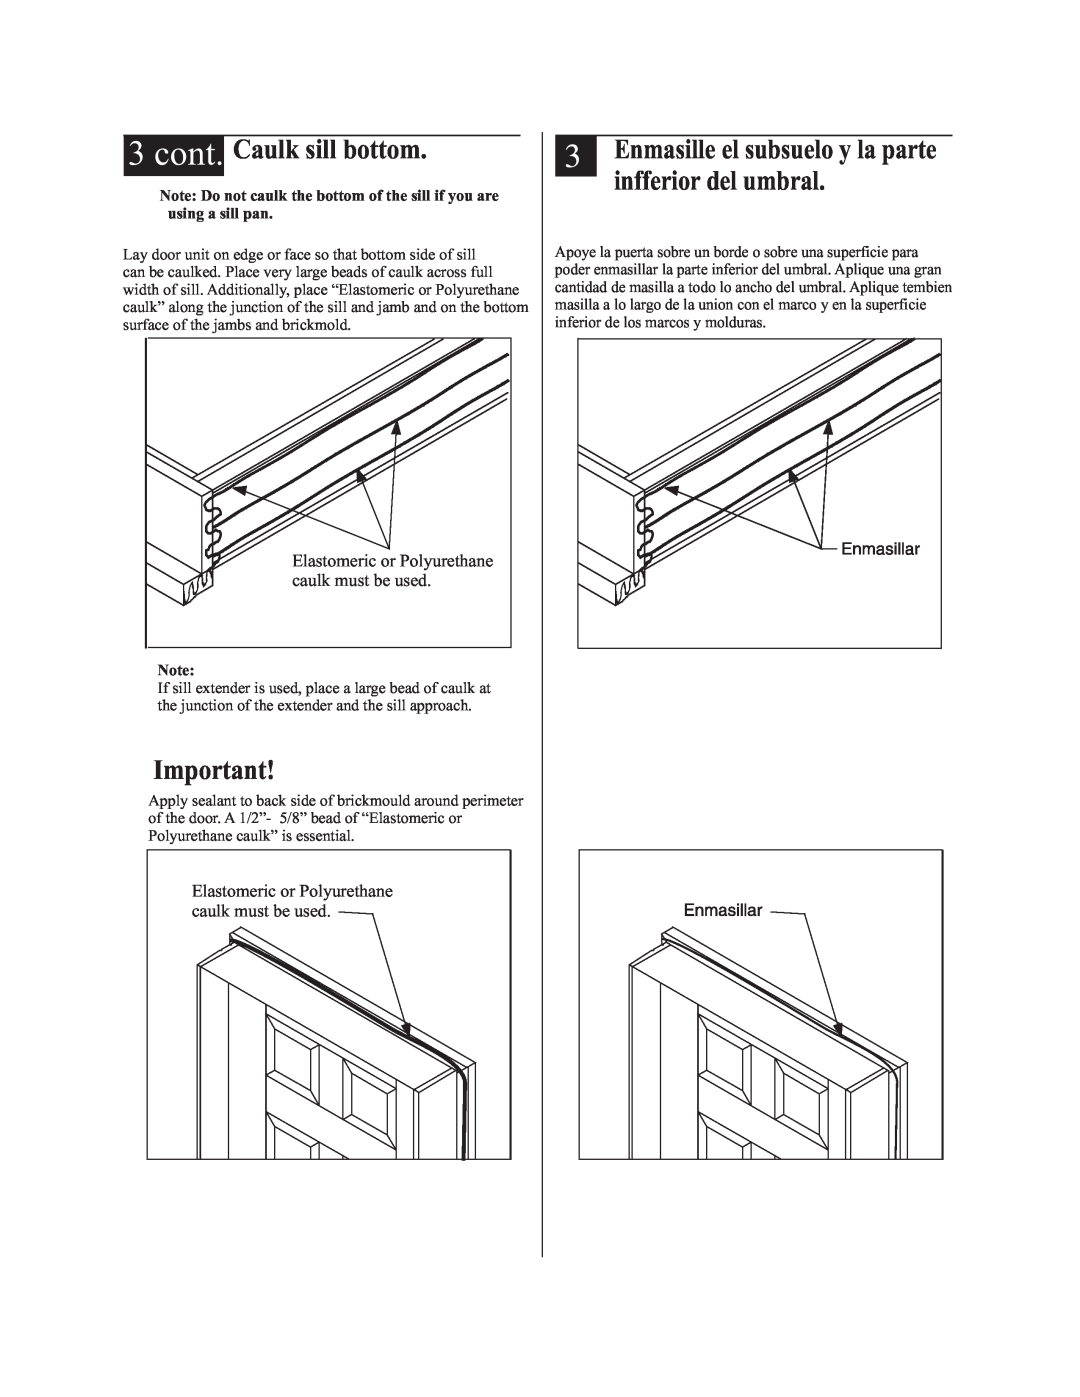 Therma-Tru Pre-hung Door Systems cont. Caulk sill bottom, Elastomeric or Polyurethane, caulk must be used 